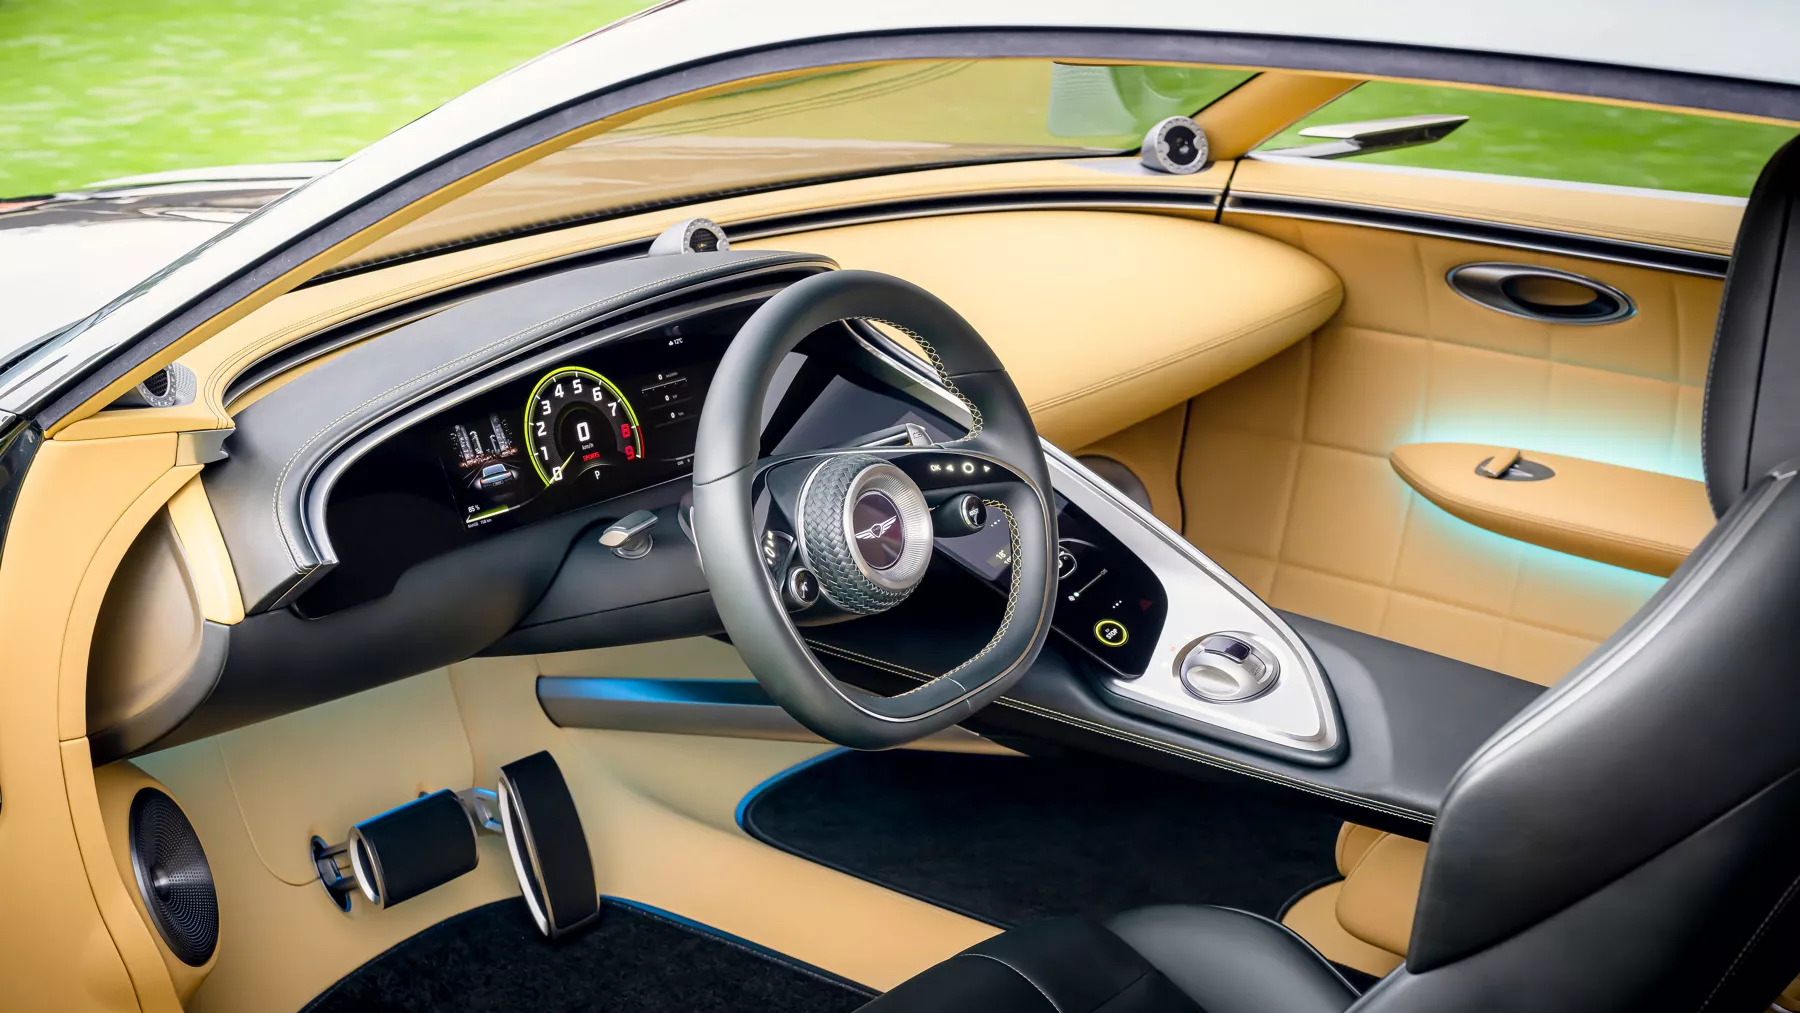 X Speedium Coupe Concept steering wheel and instrument gauge cluster.